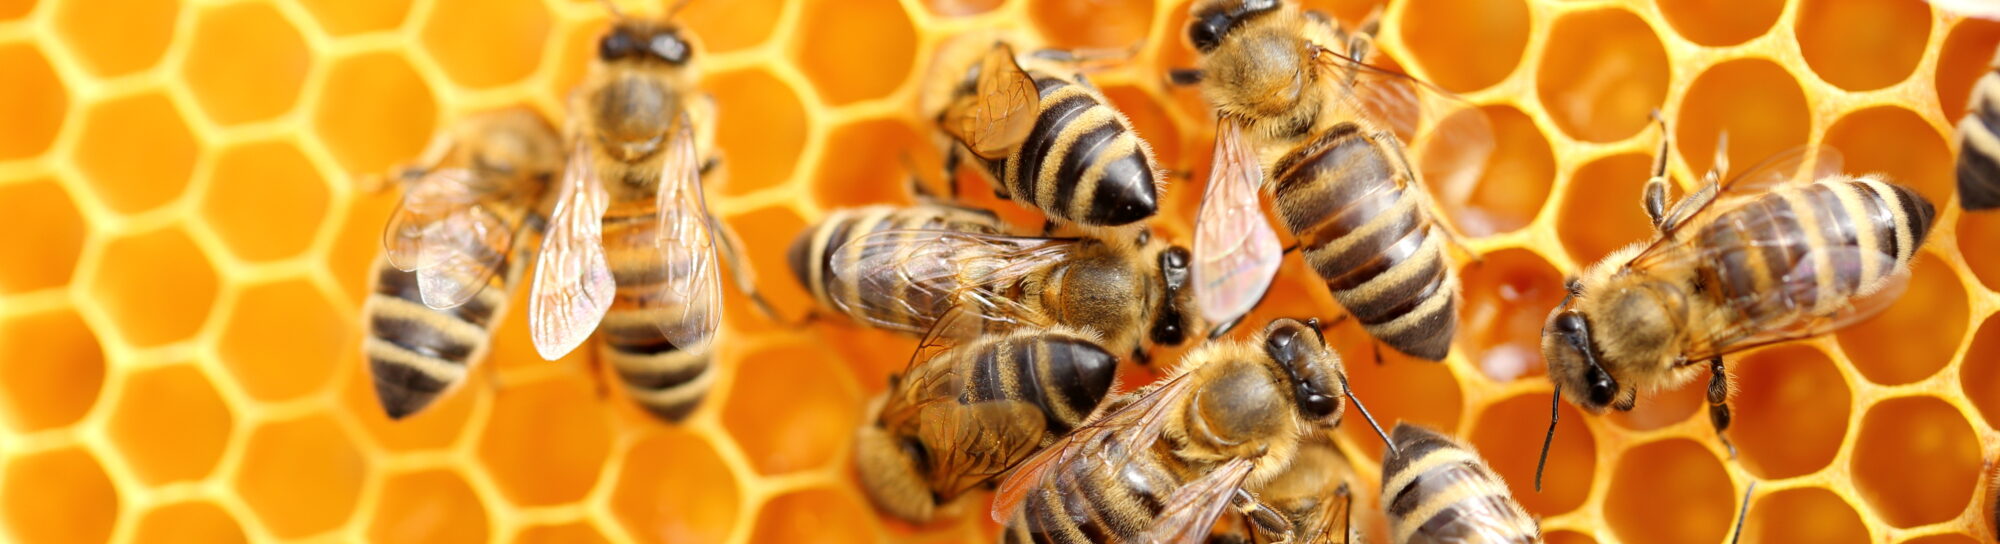 Bienen: Gentechnischer Schutz gegen die Varroamilbe in Sicht